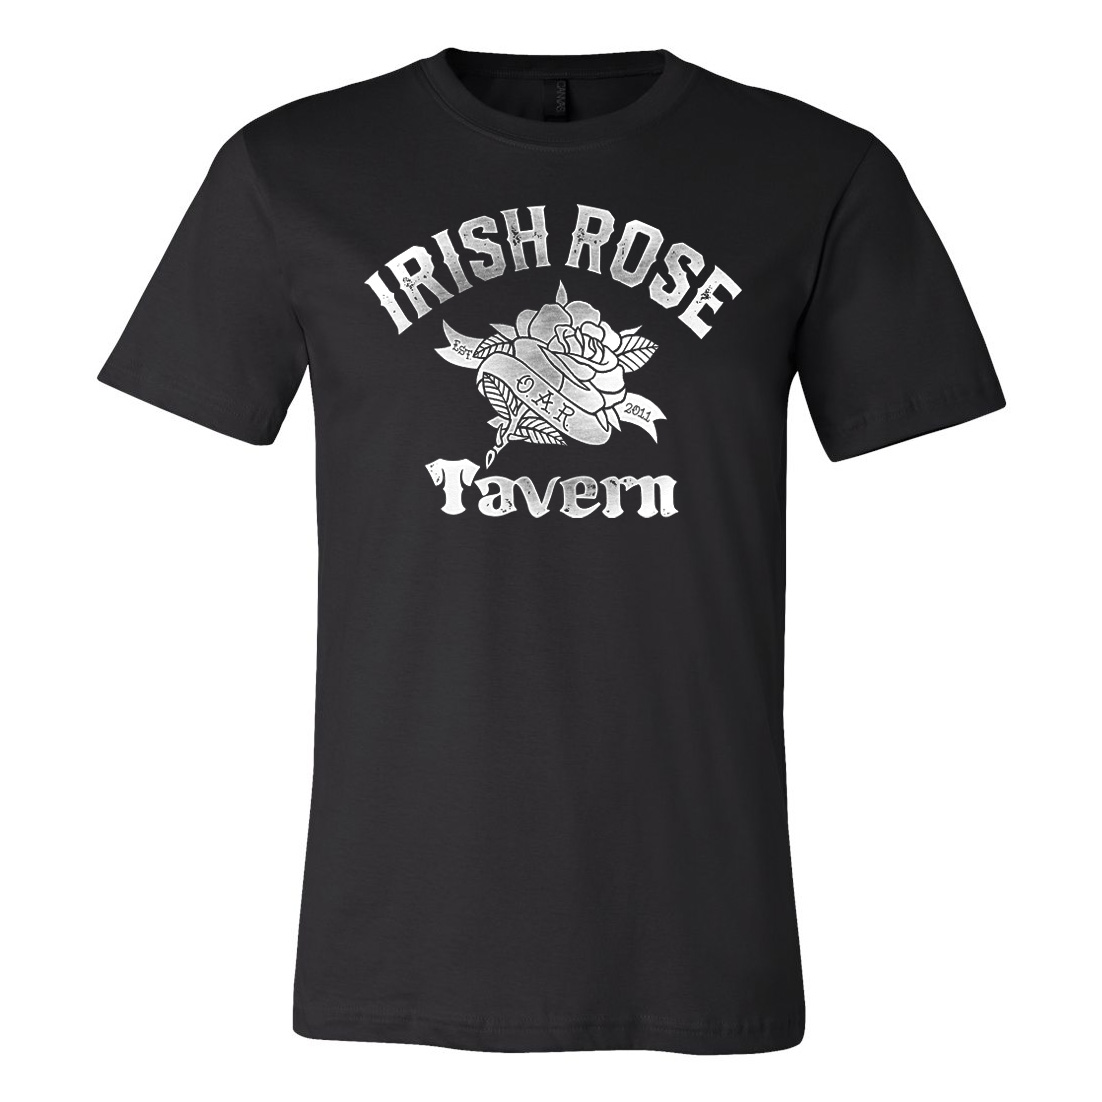 Irish Rose Tavern 2021 Tee Black